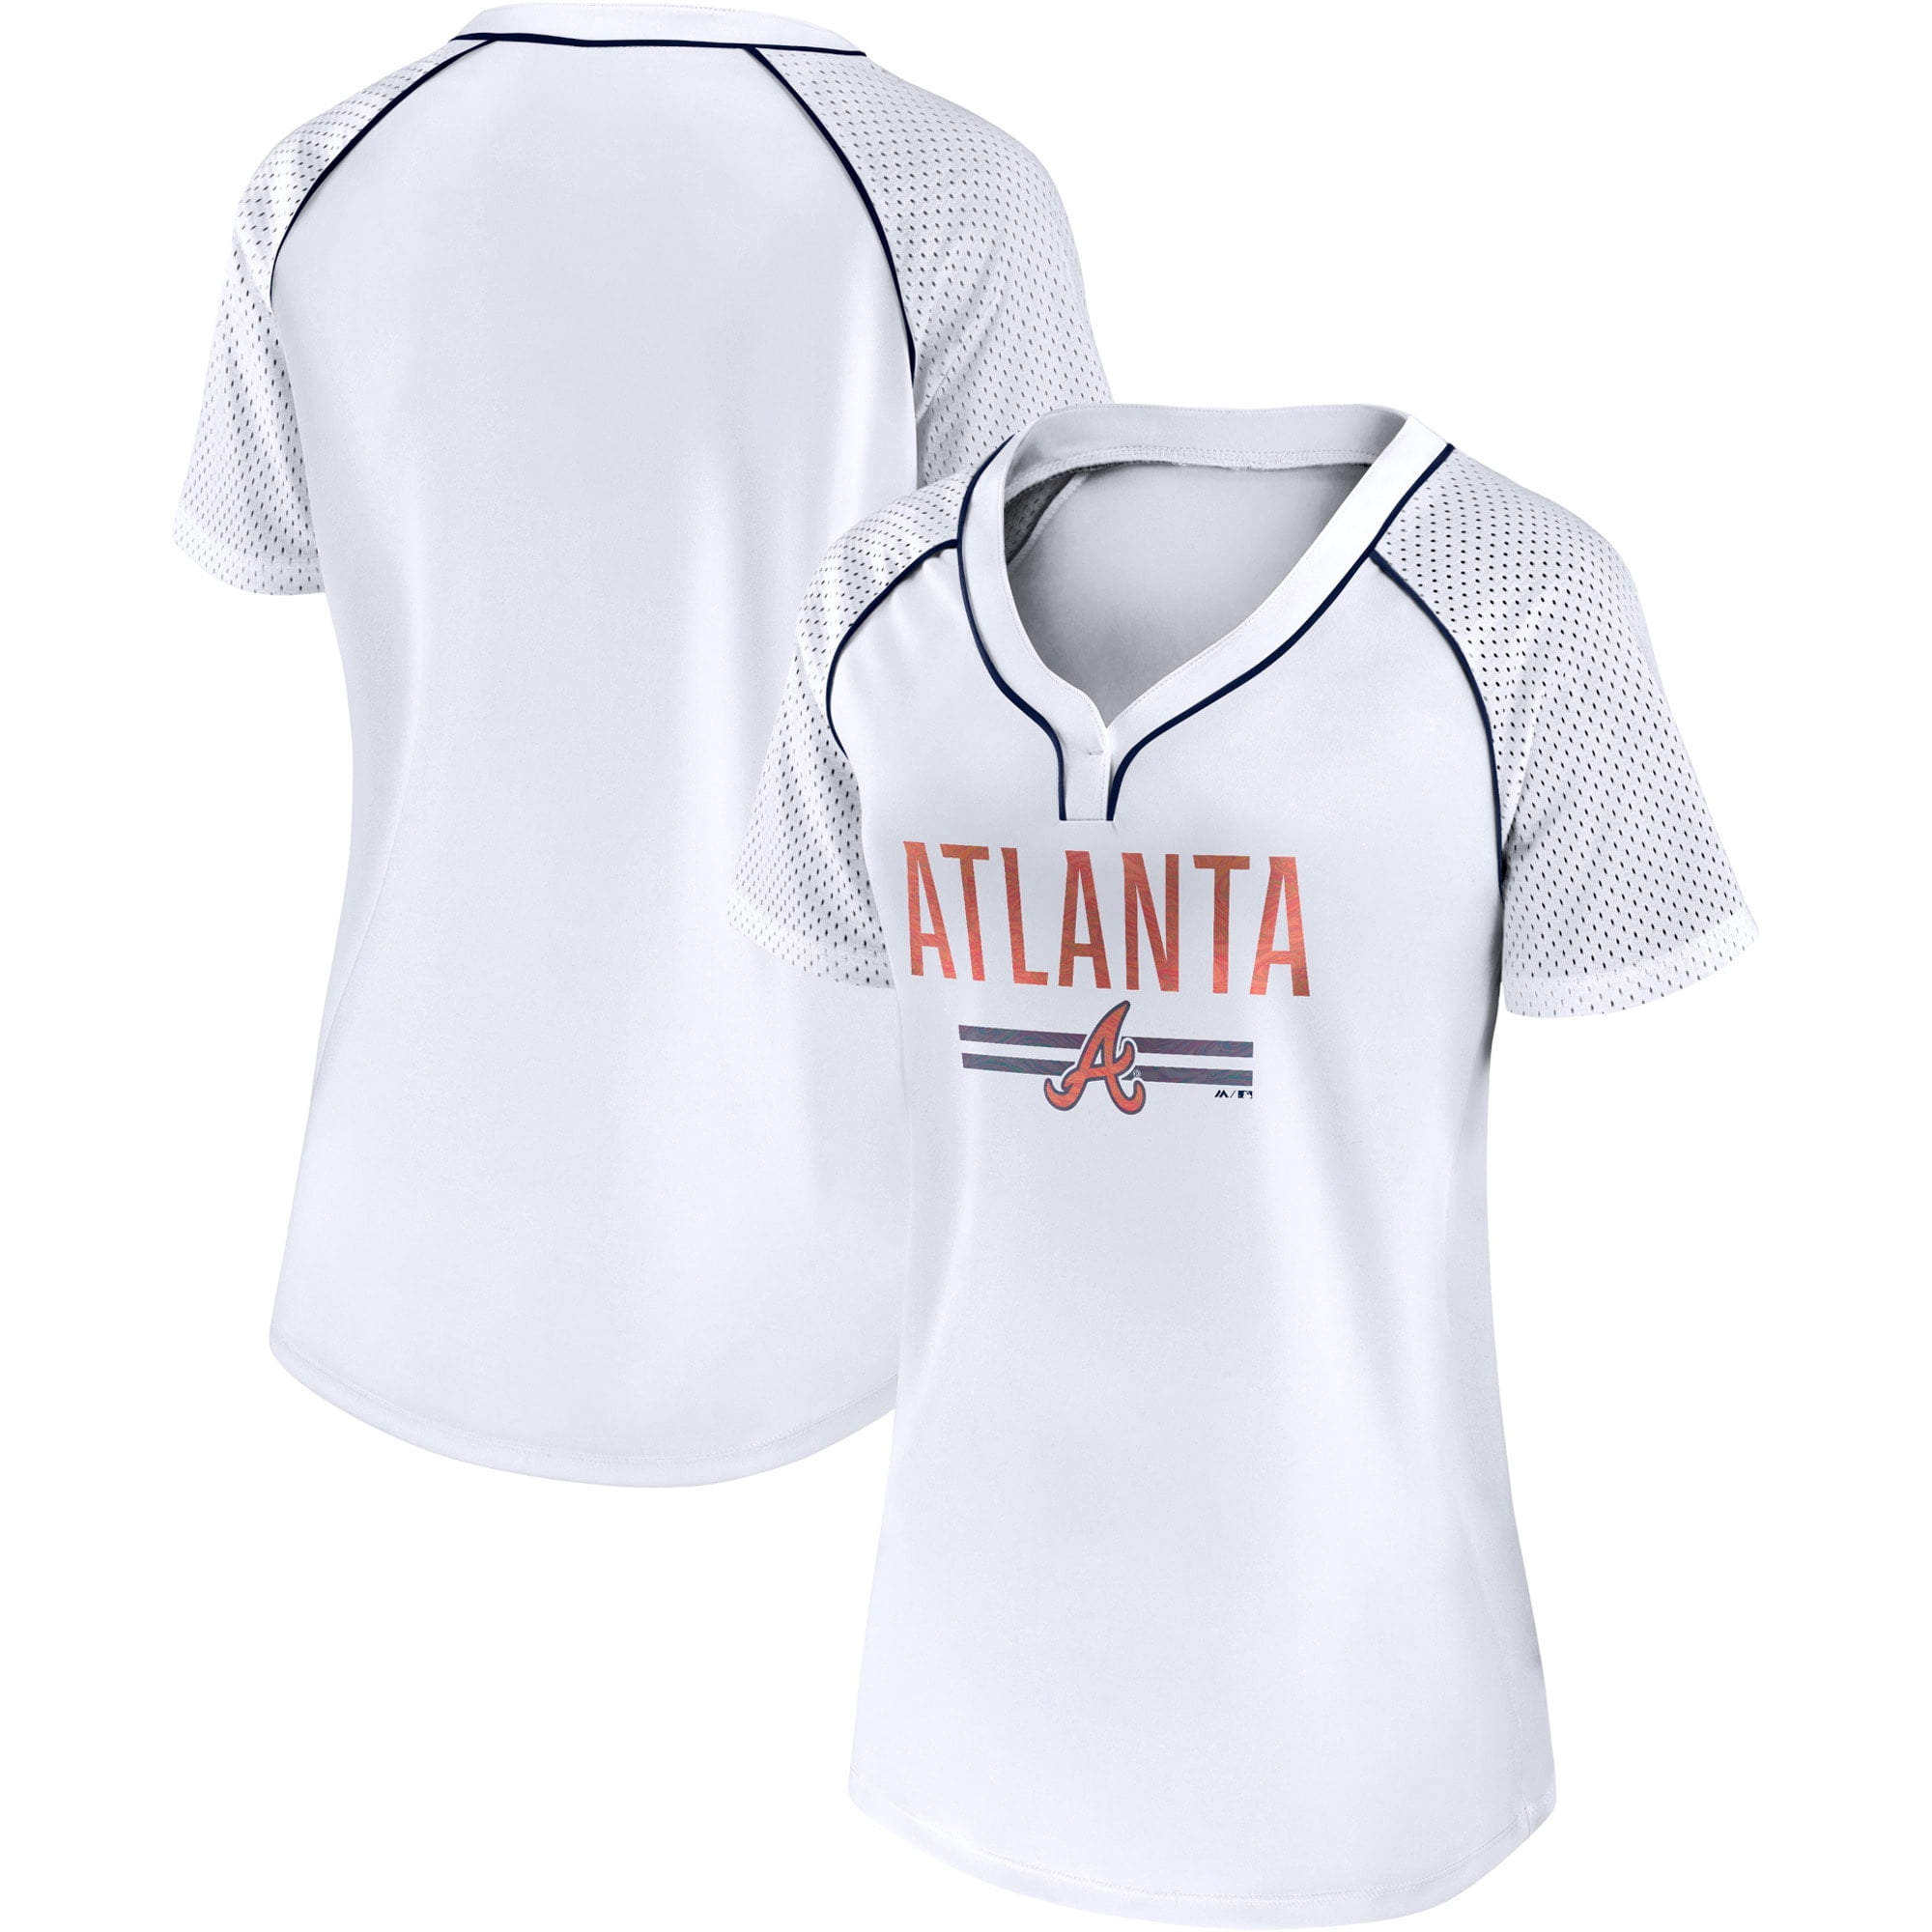 Women's Fanatics Branded White Atlanta Braves Play Calling Raglan V-Neck  T-Shirt 